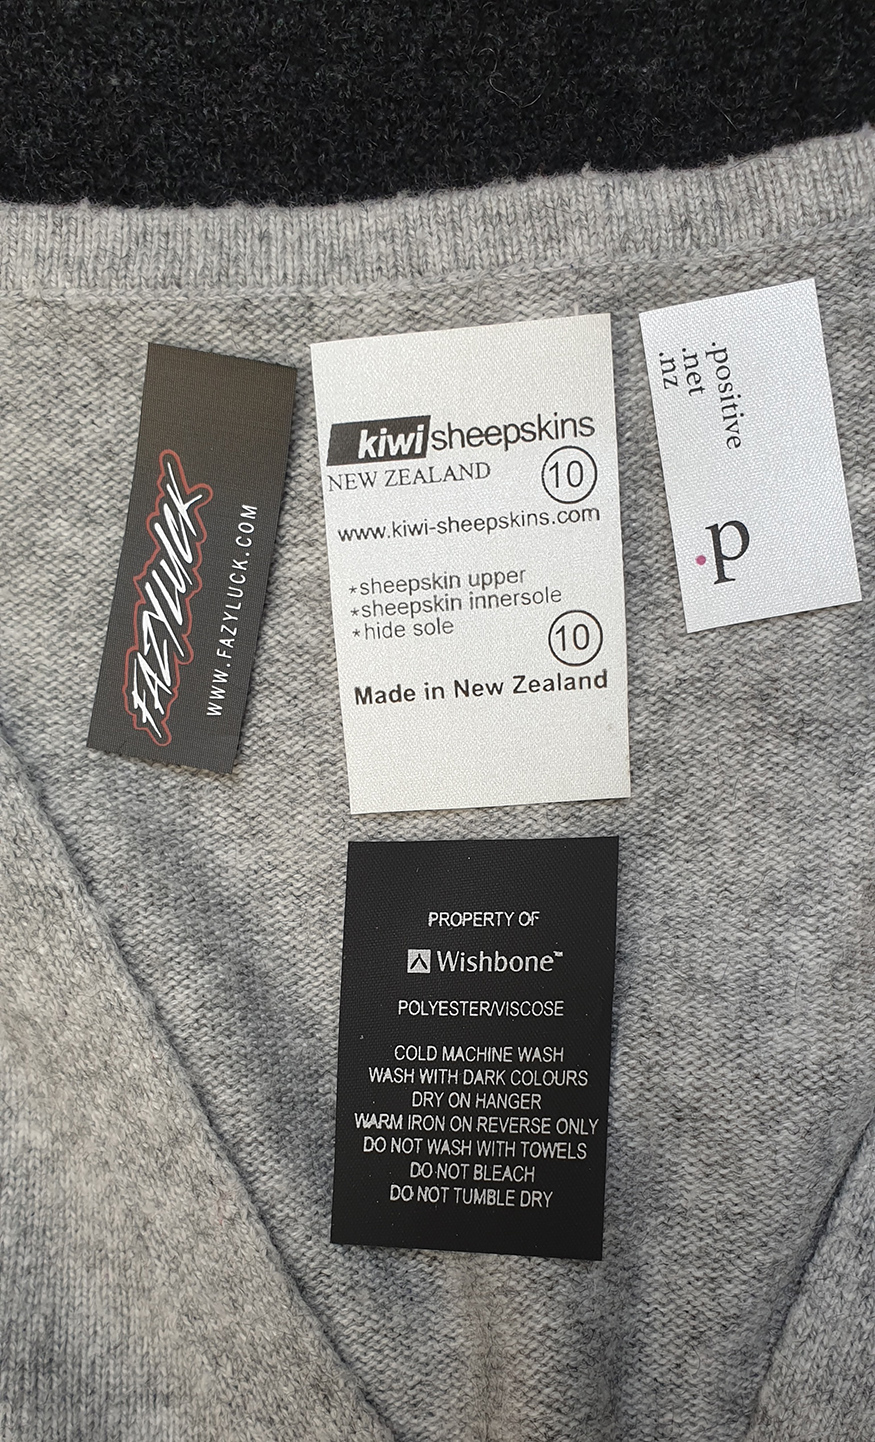 Printed garment label example